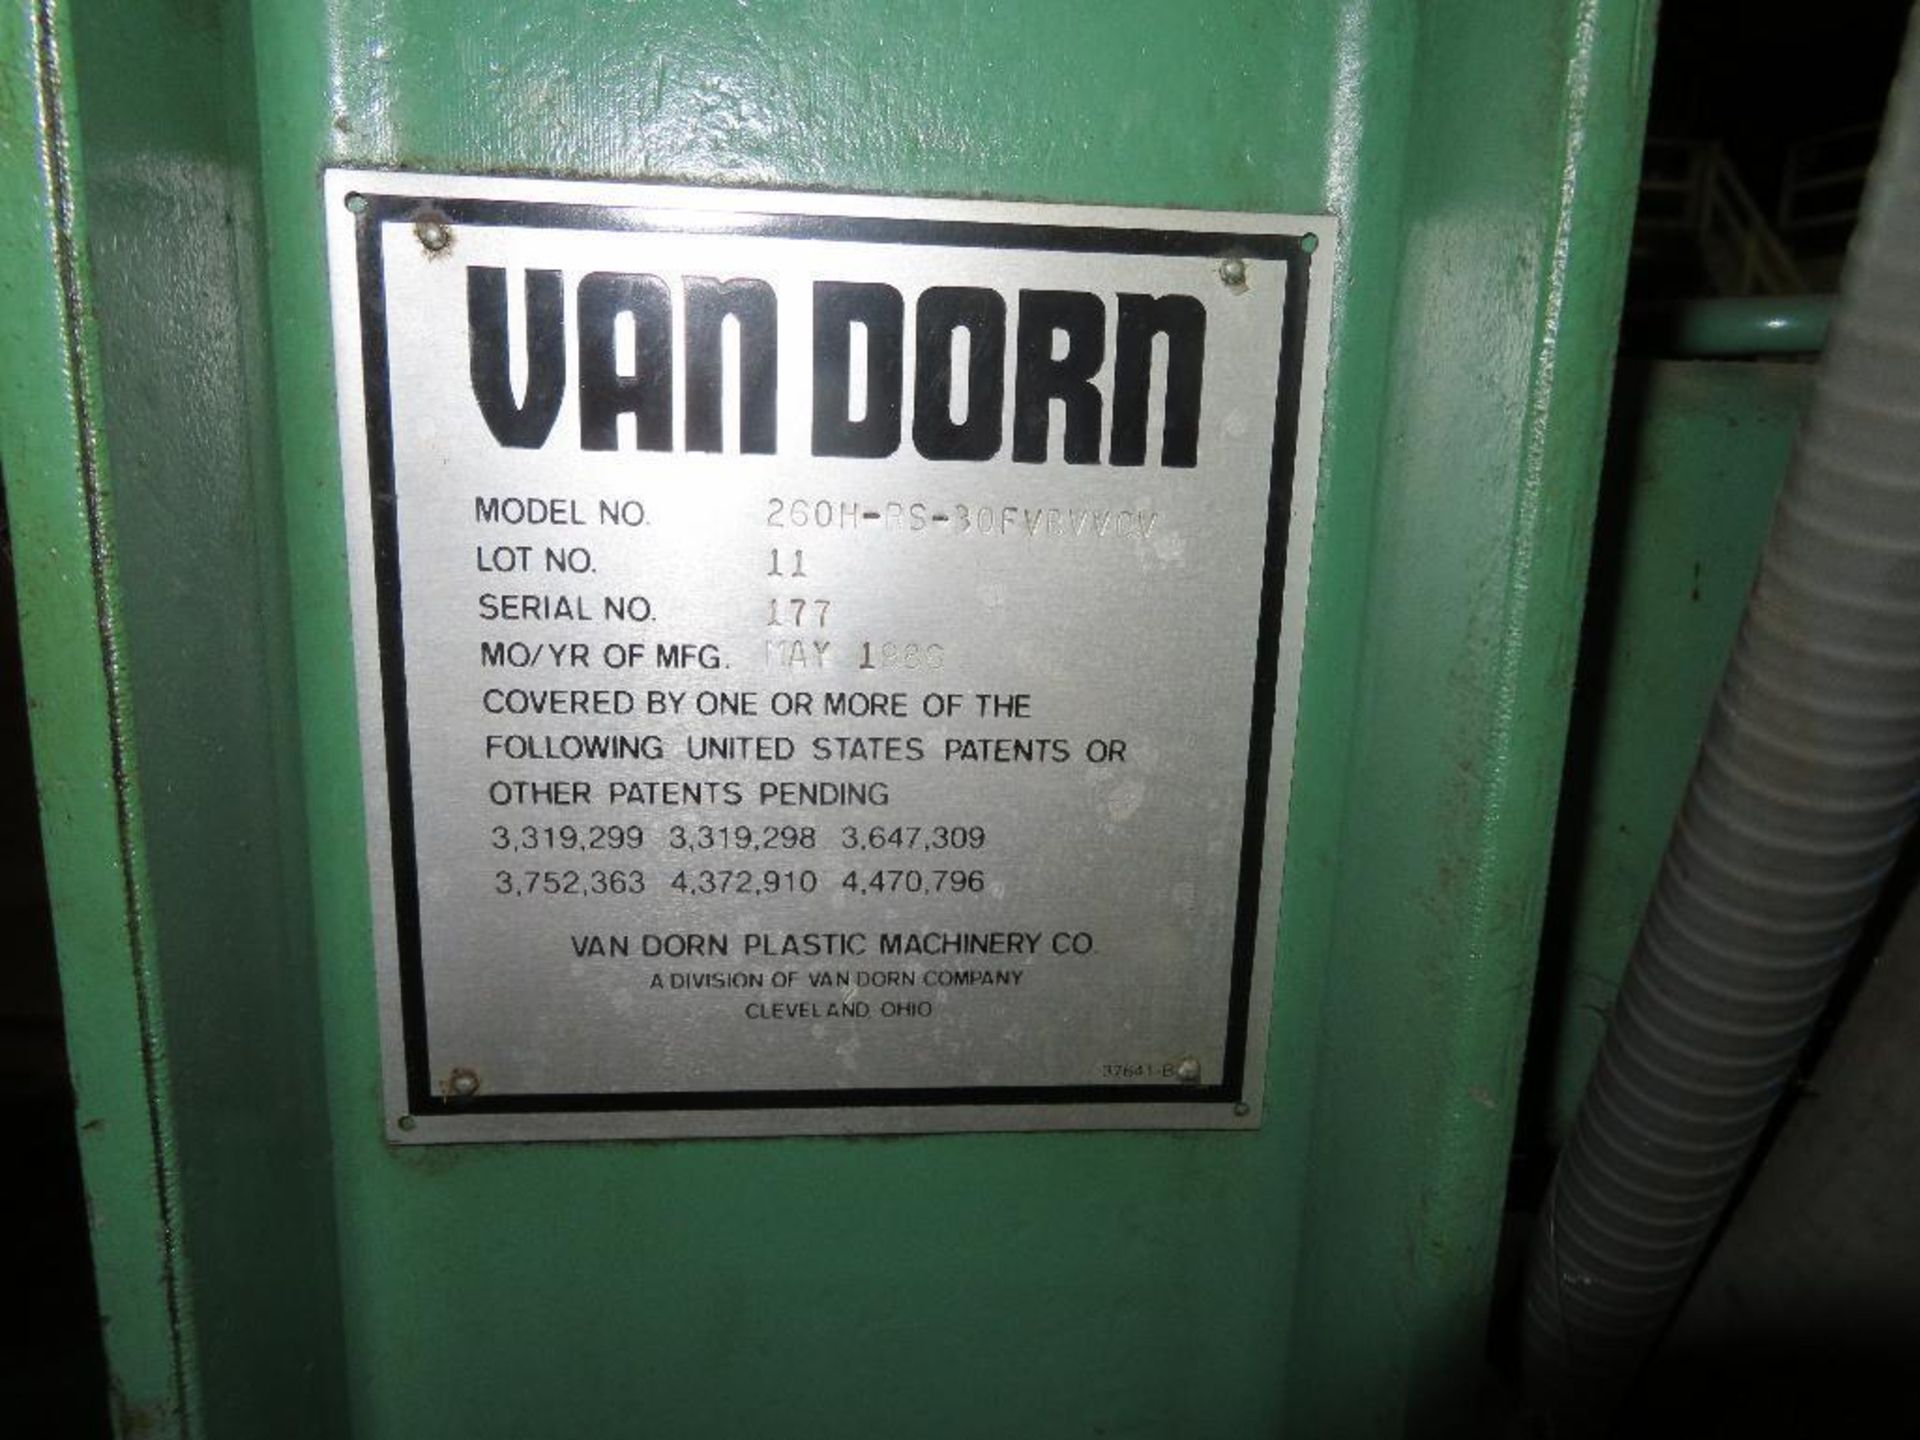 Van Dorn 260 Ton, 30 oz. Hydraulic Injection Molding Machine Model 260H-RS-30FVBVVCV, S/N 177 (1986) - Image 7 of 7